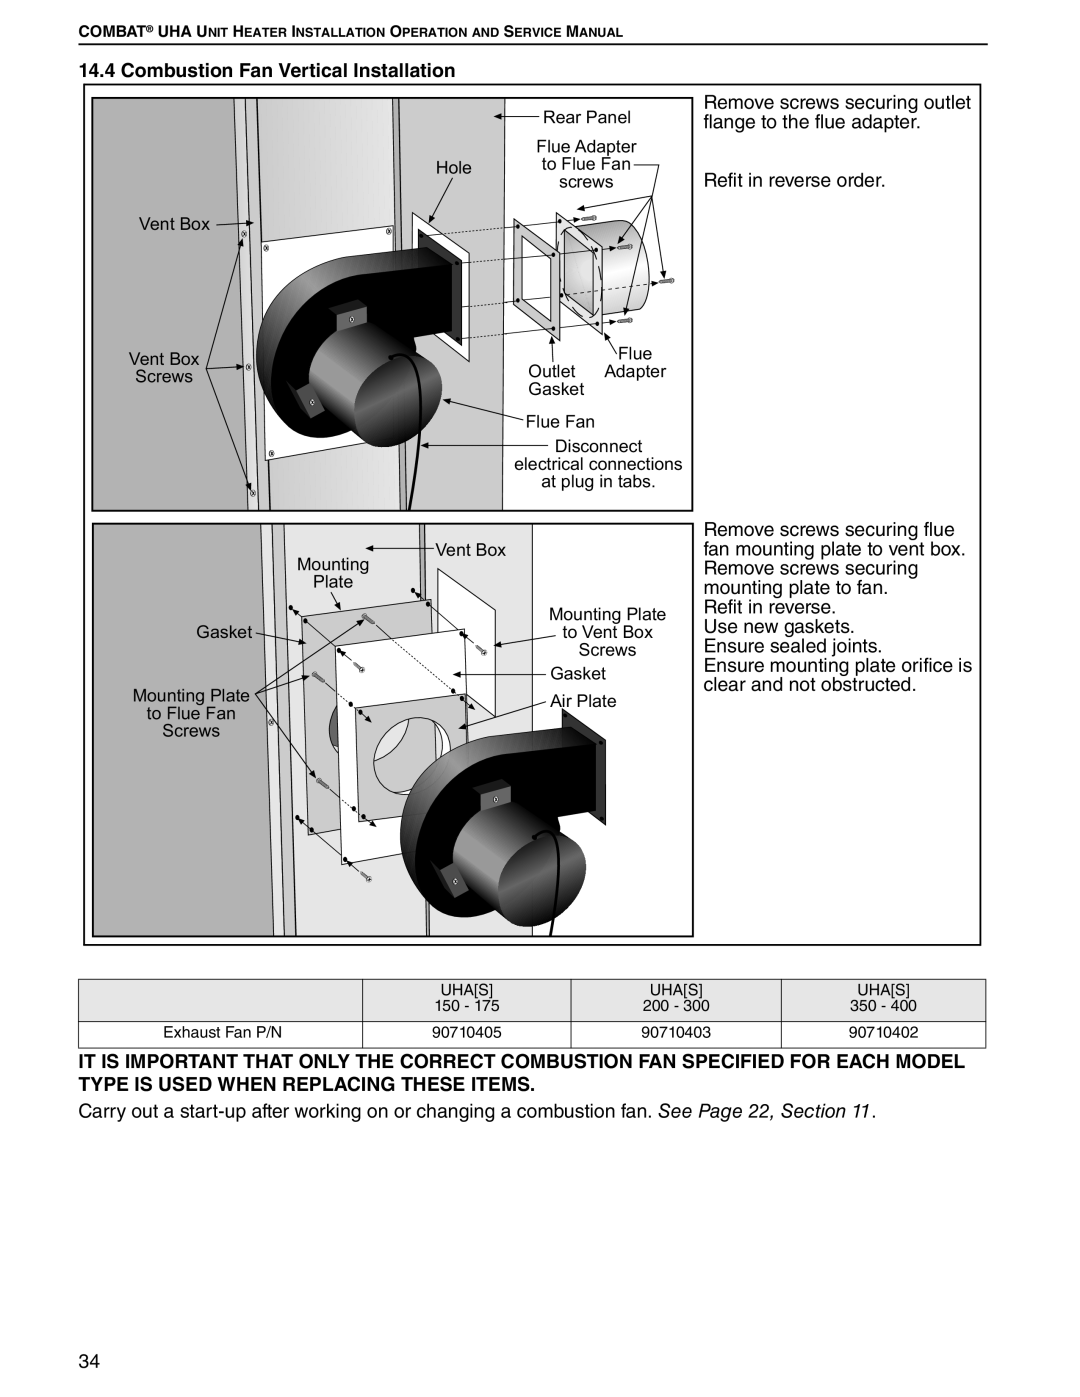 Roberts Gorden 200, 350, 150, 400, 250, 300, 225, 175 service manual Combustion Fan Vertical Installation 